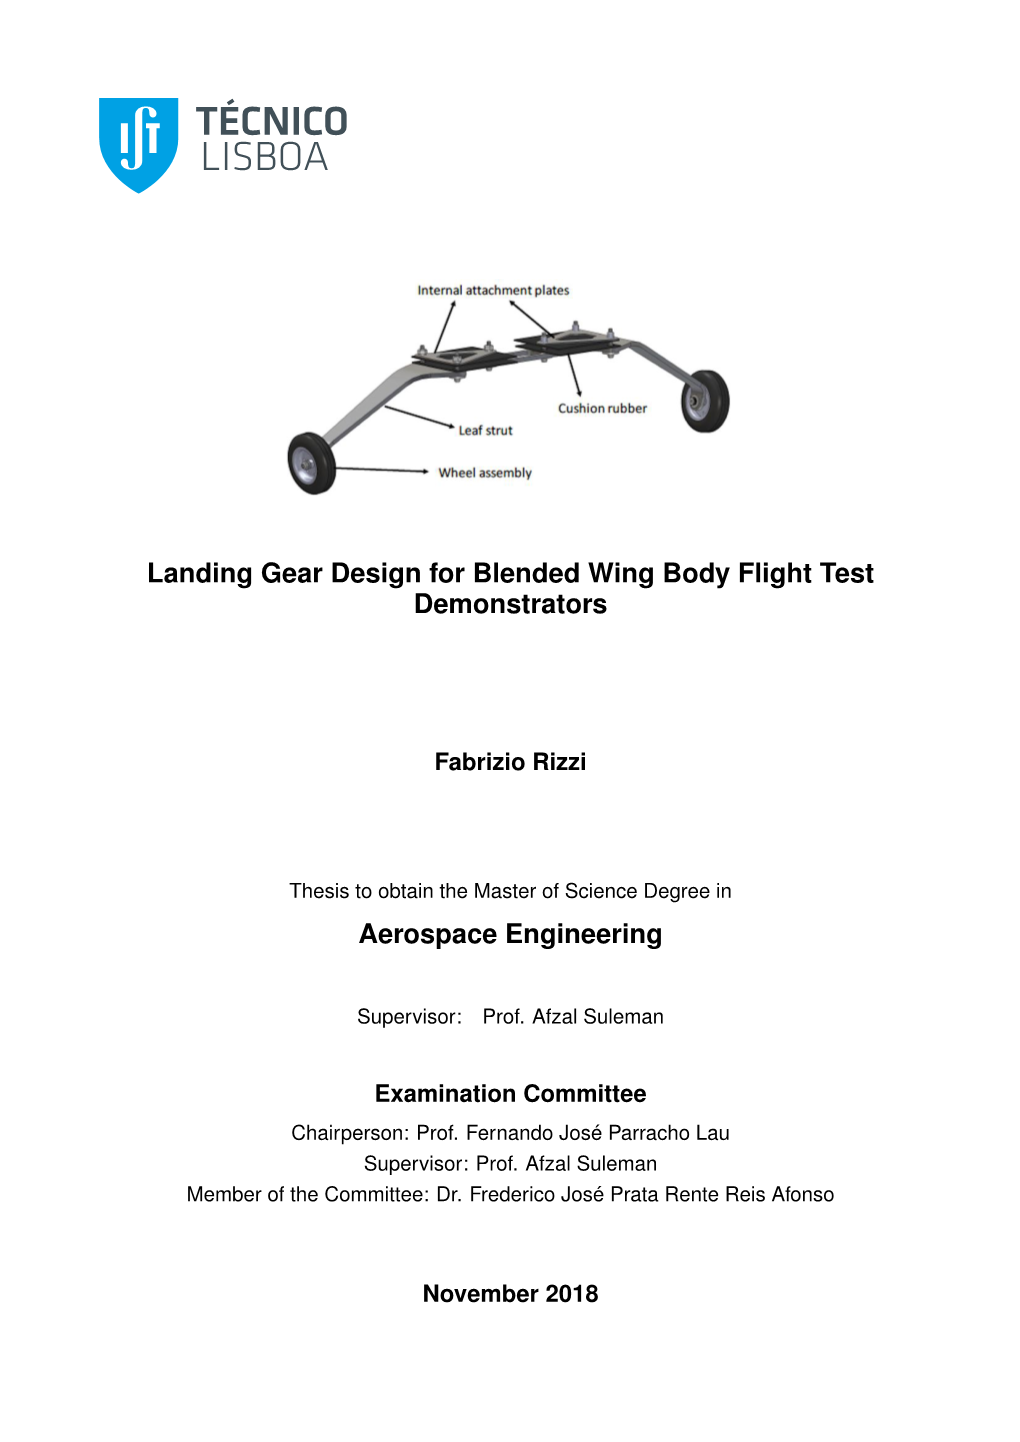 Landing Gear Design for Blended Wing Body Flight Test Demonstrators Aerospace Engineering